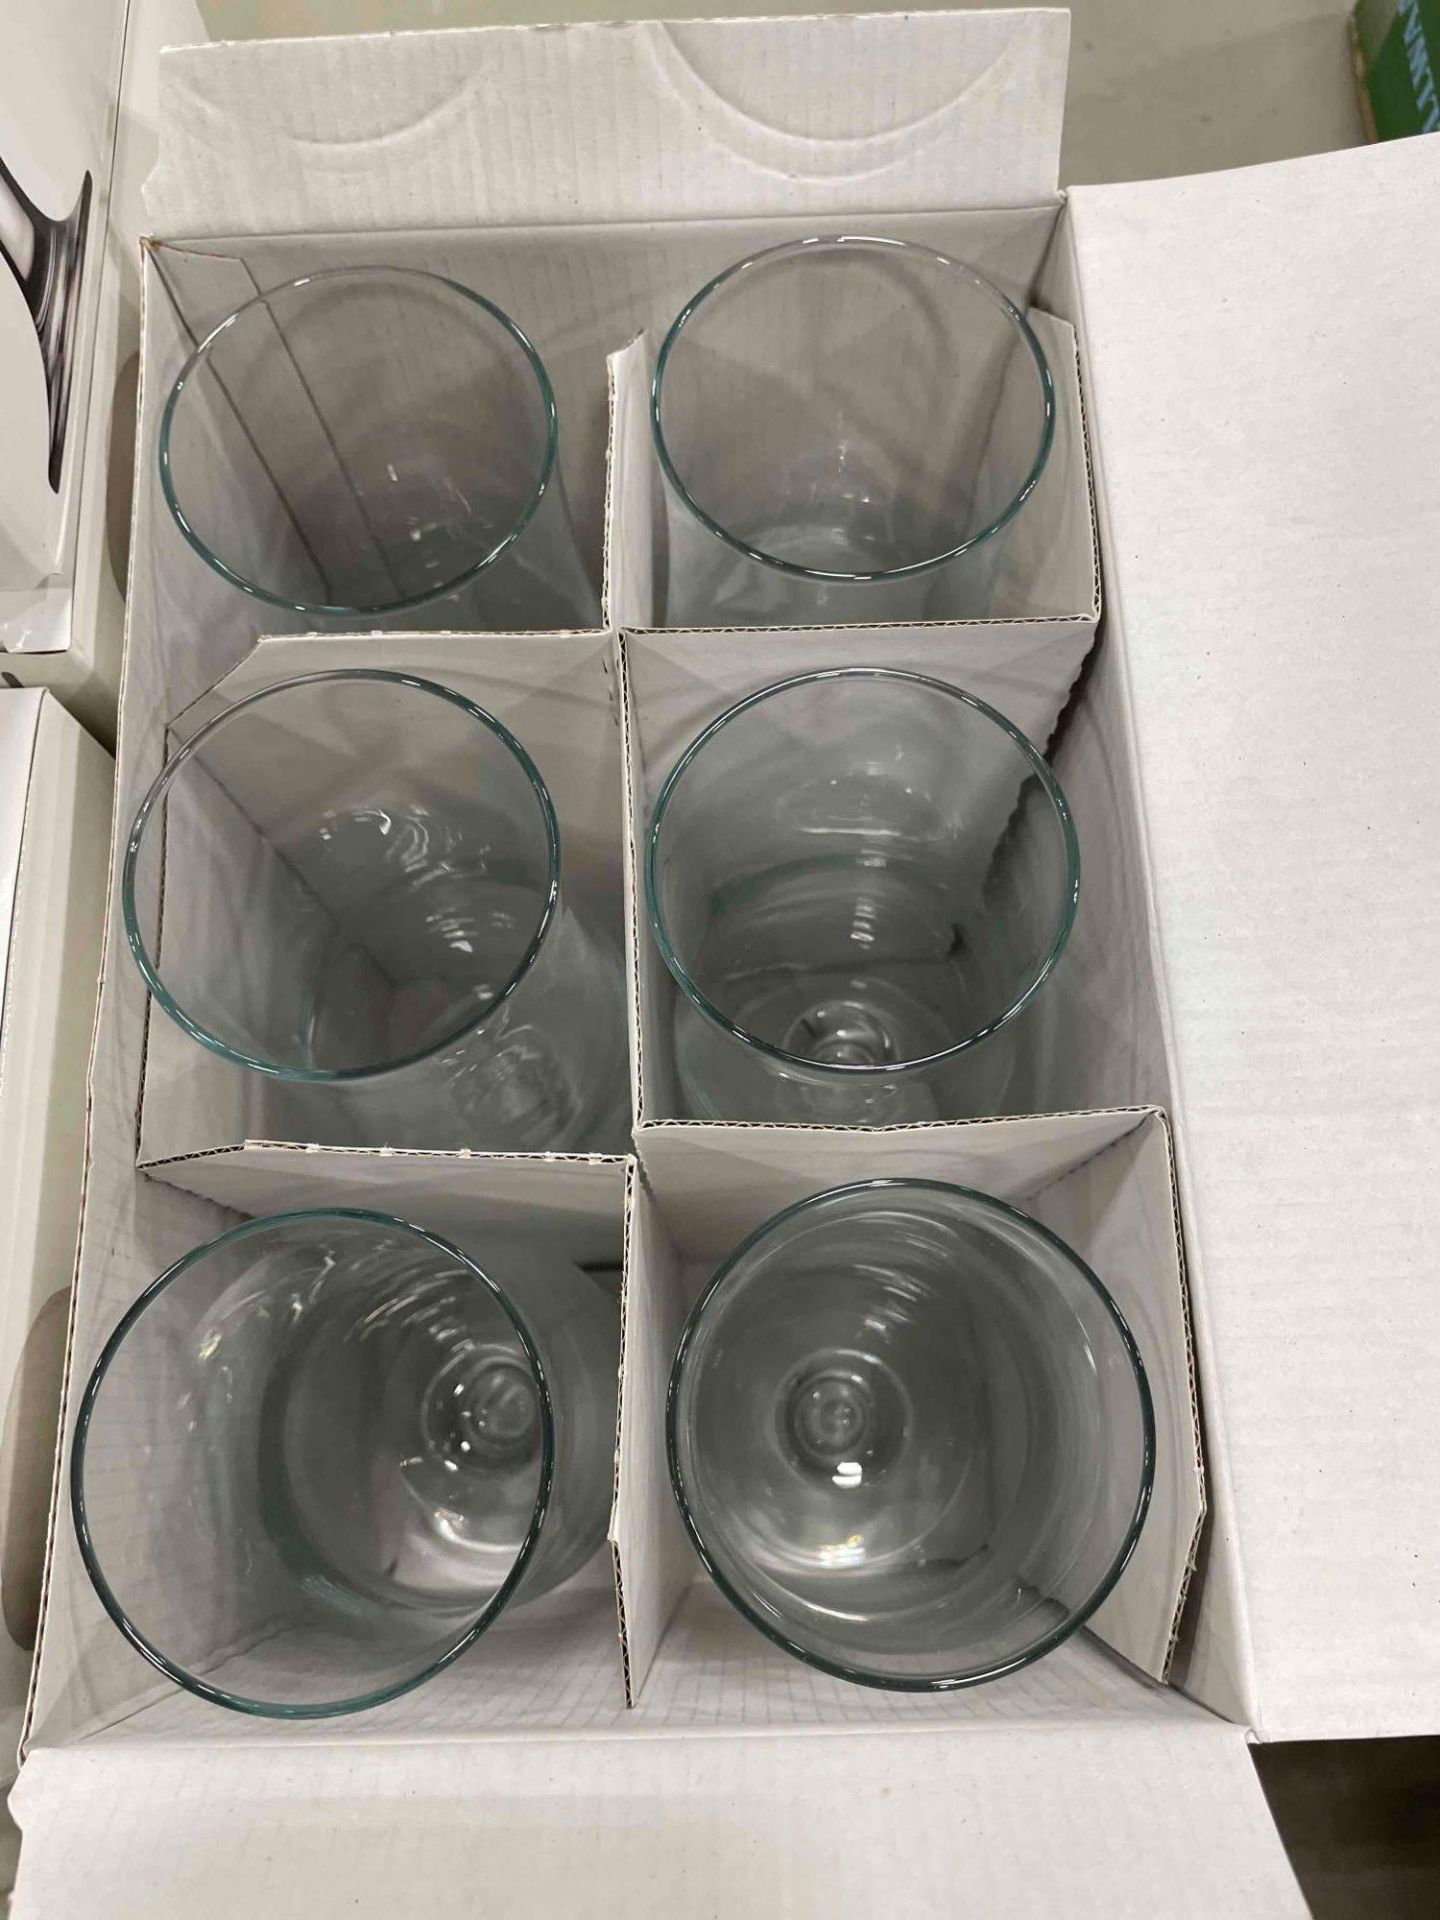 4 BOXES OF PASABAHCE 12 OZ. MALDIVE TULIPE BEER GLASSES, 6/BOX - NEW - Image 3 of 4